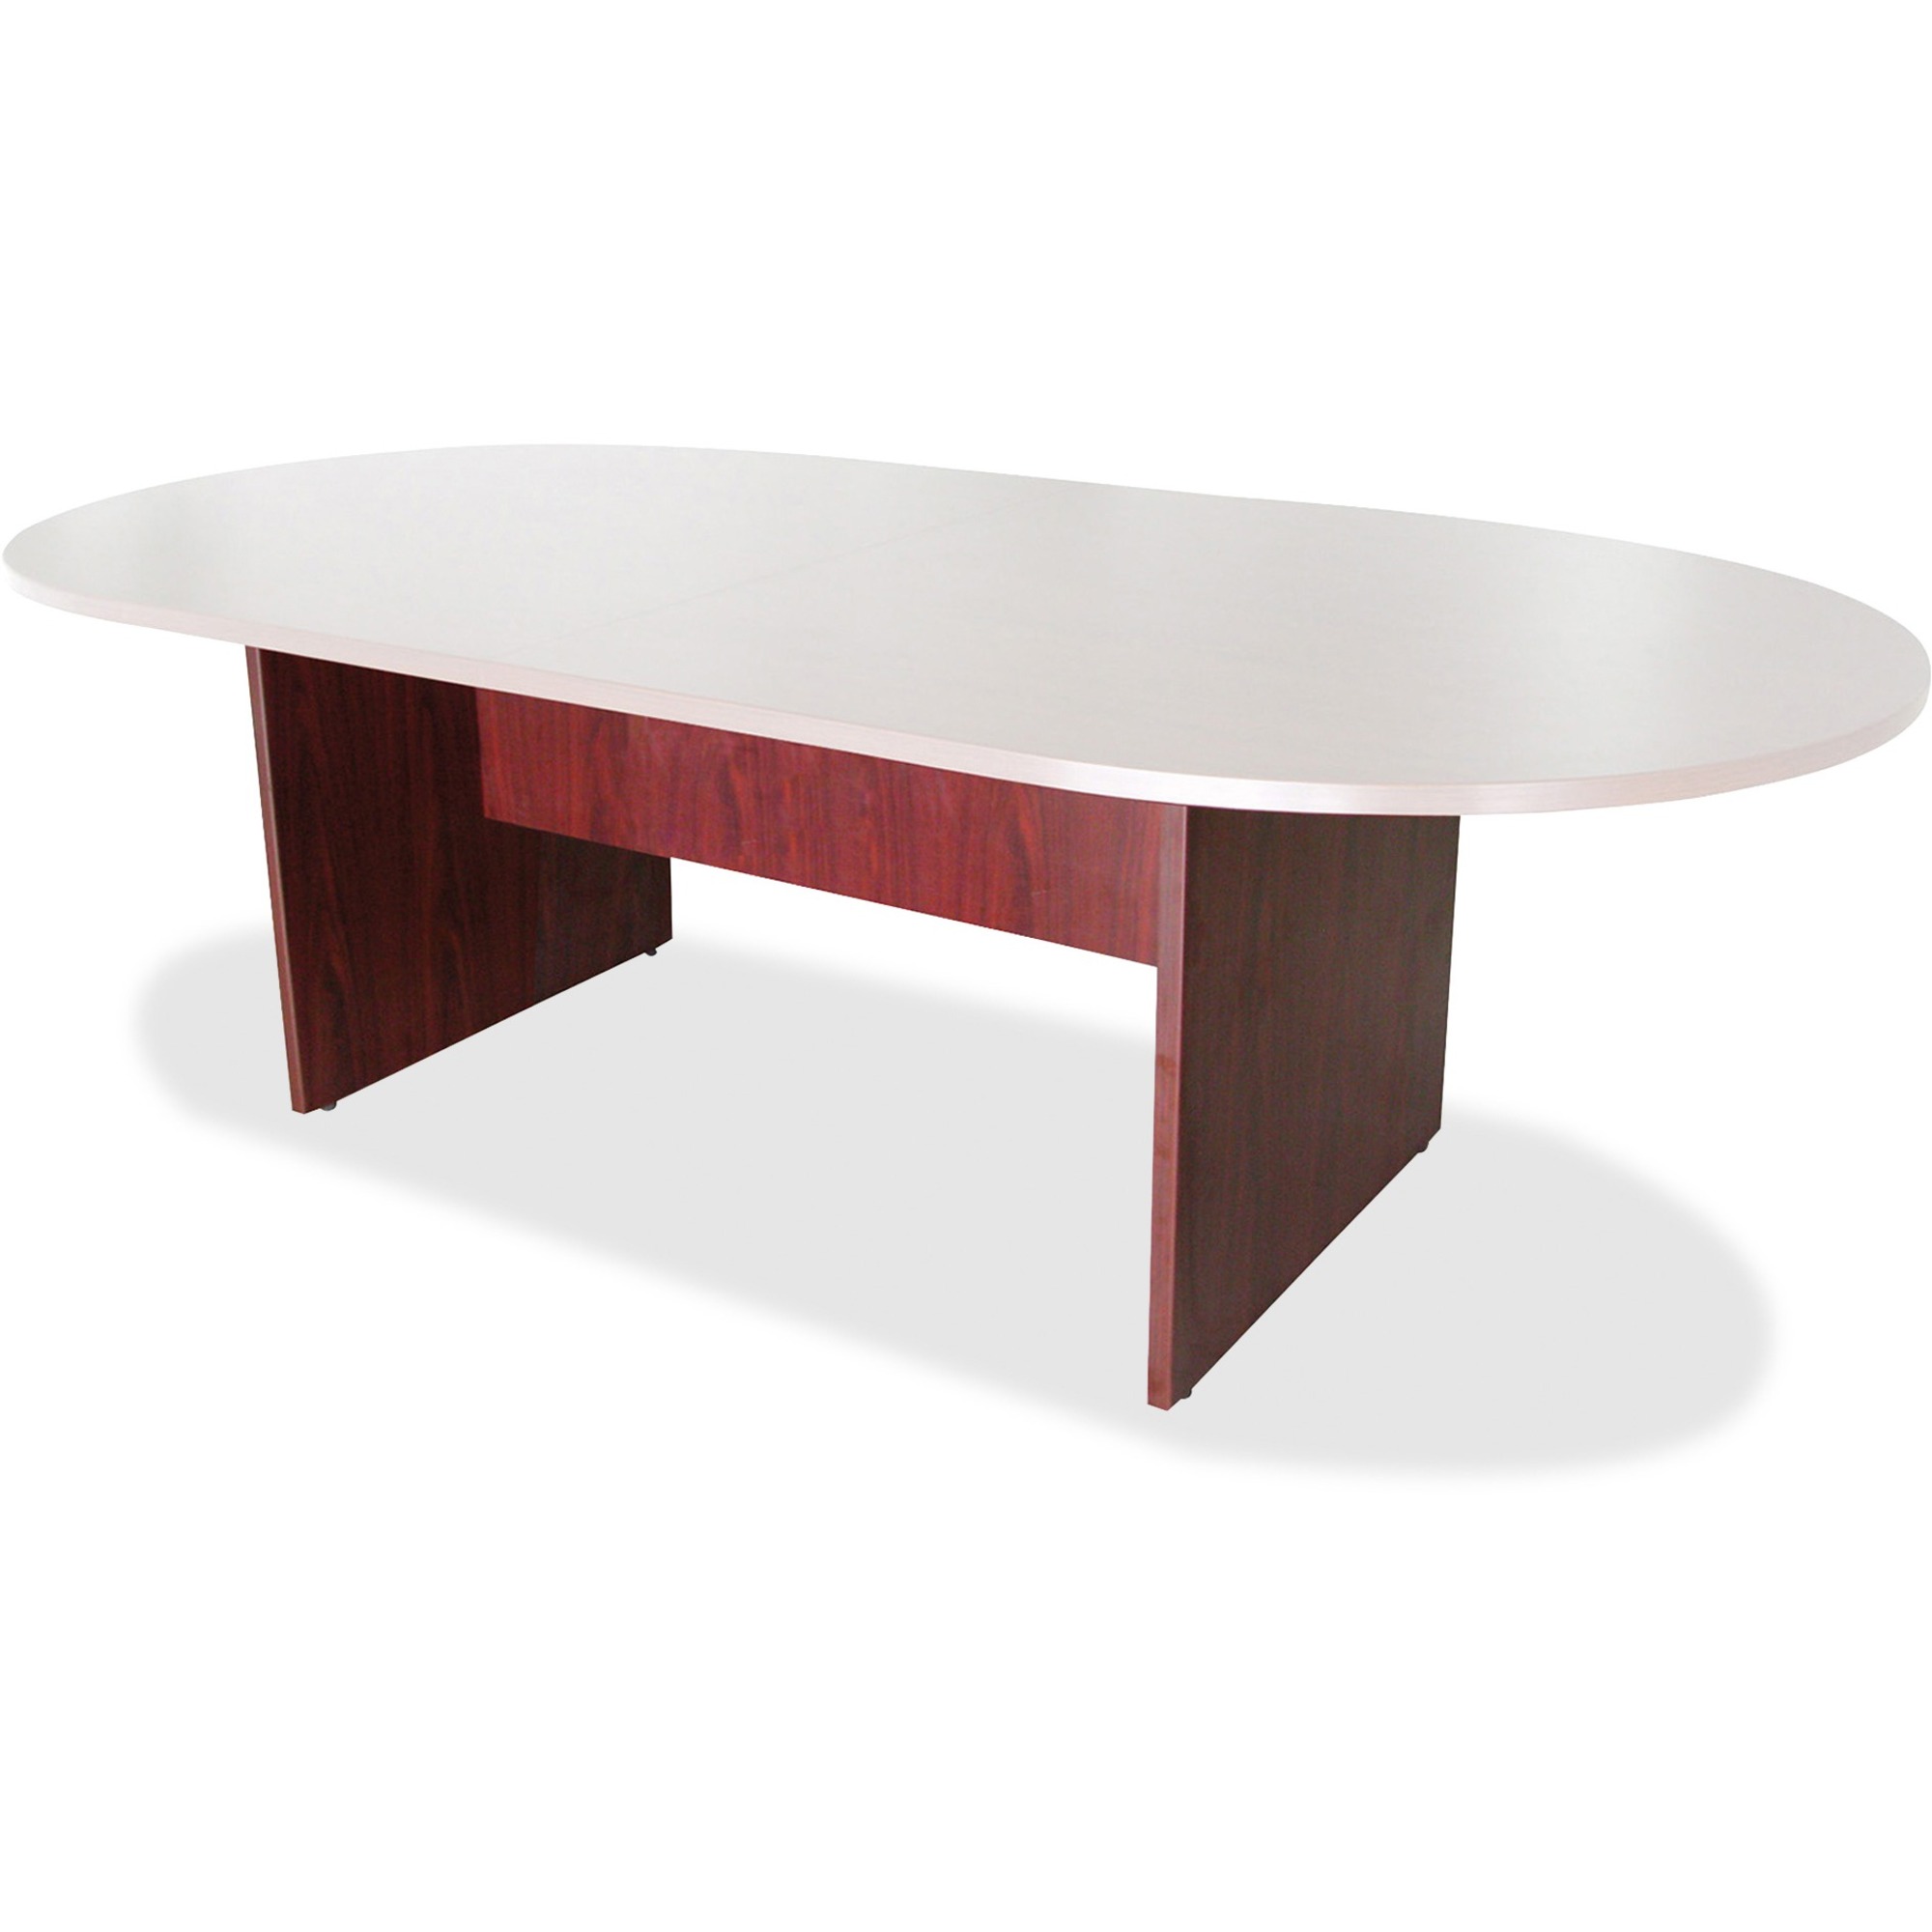 UNICOR Shopping: 96W x 42D Baritone Panel-Base Conference Table